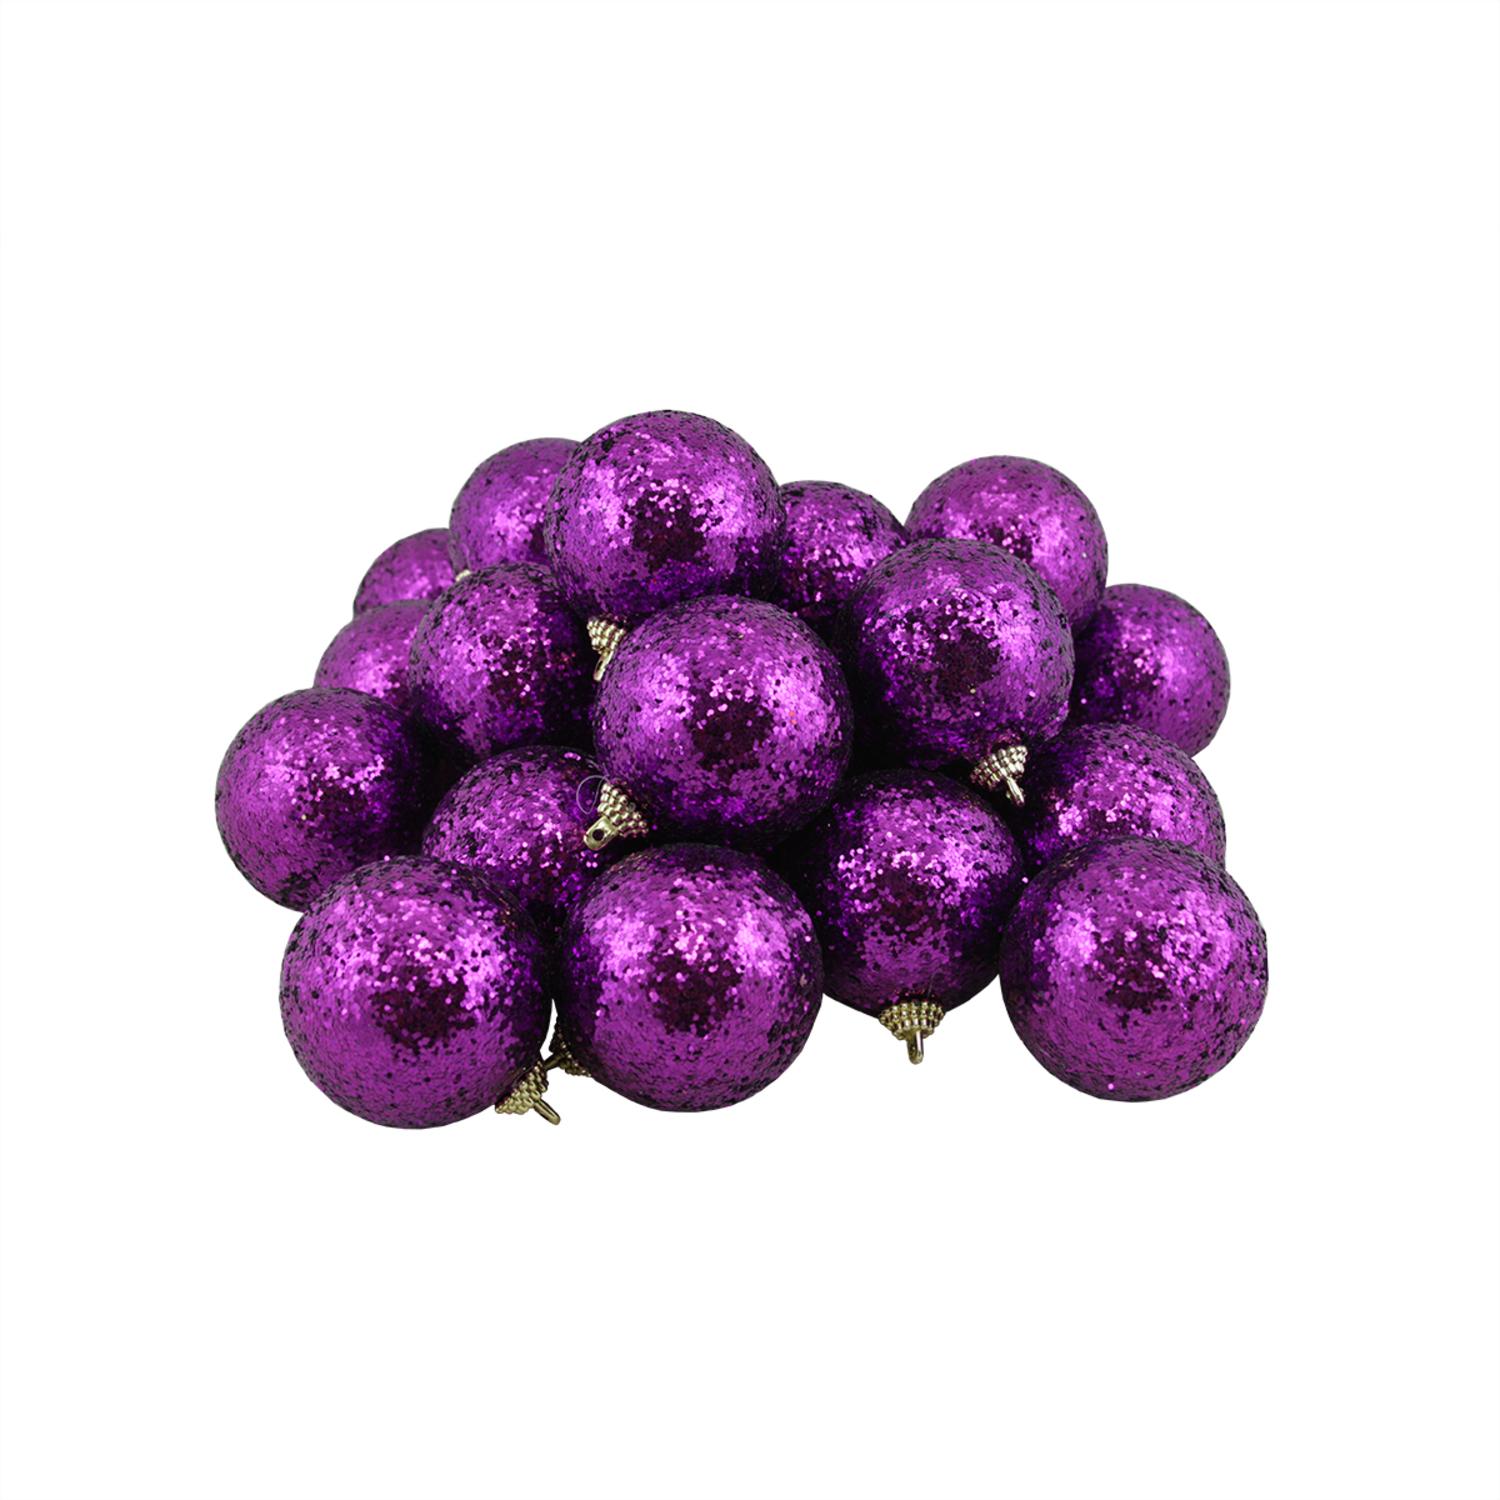 24ct Purple Shatterproof Sequin Finish Christmas Ball Ornaments 2.5 ...